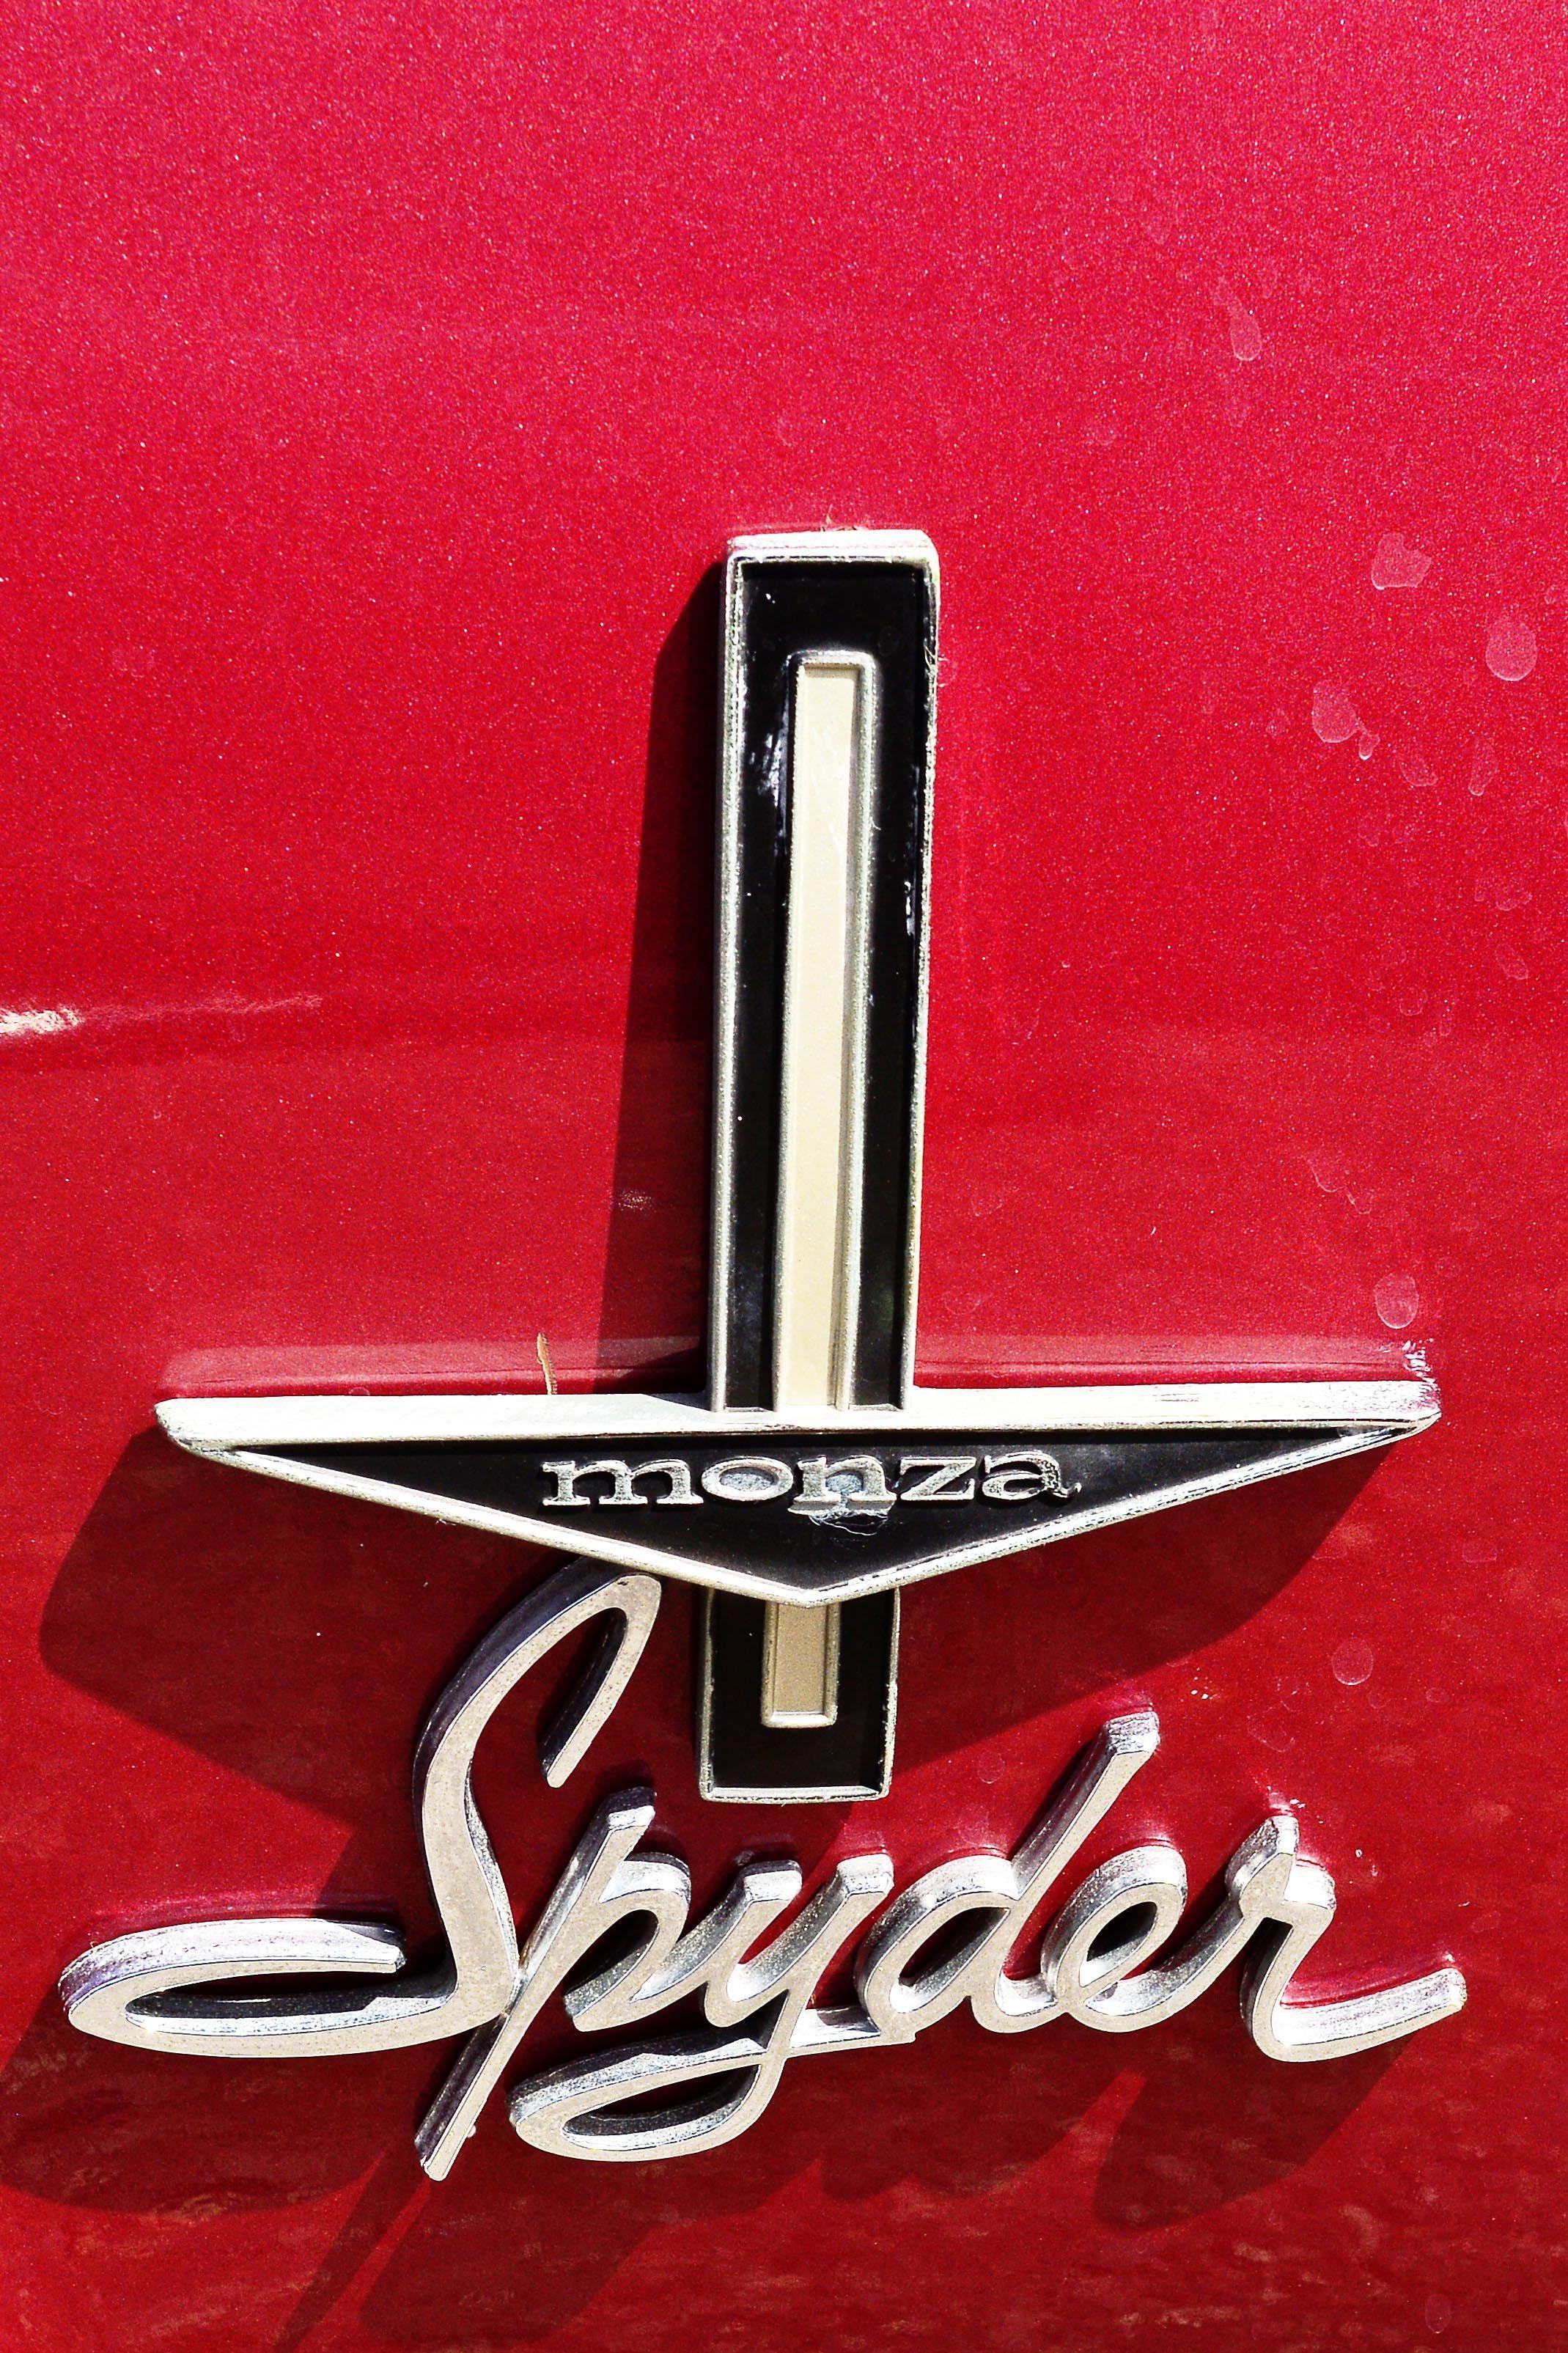 Corvair Logo - Corvair Monza Spyder fender badge at Automobile Drive Museum, El